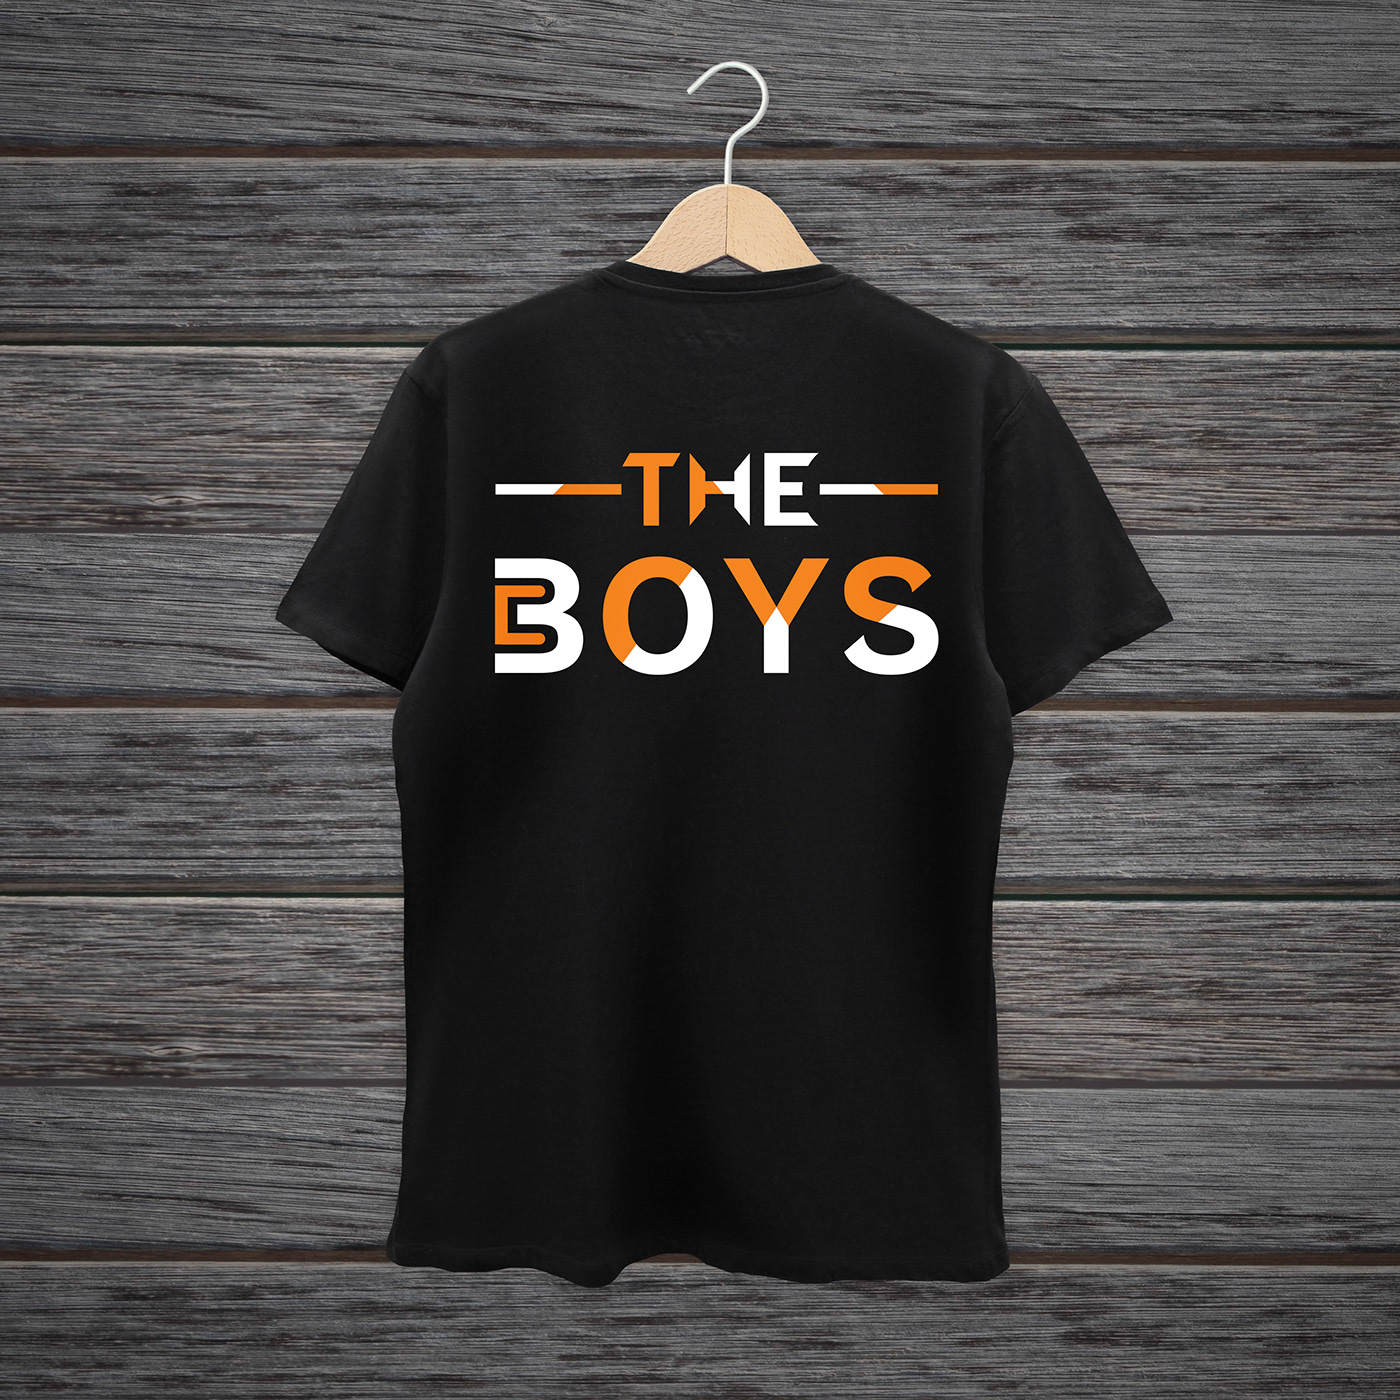 ACTIVE SHIRT t-shirt Tshirt Design Clothing typography   Tshirt design ideas tshirts Boys tshirt modern tshirt Stylish t-shirt